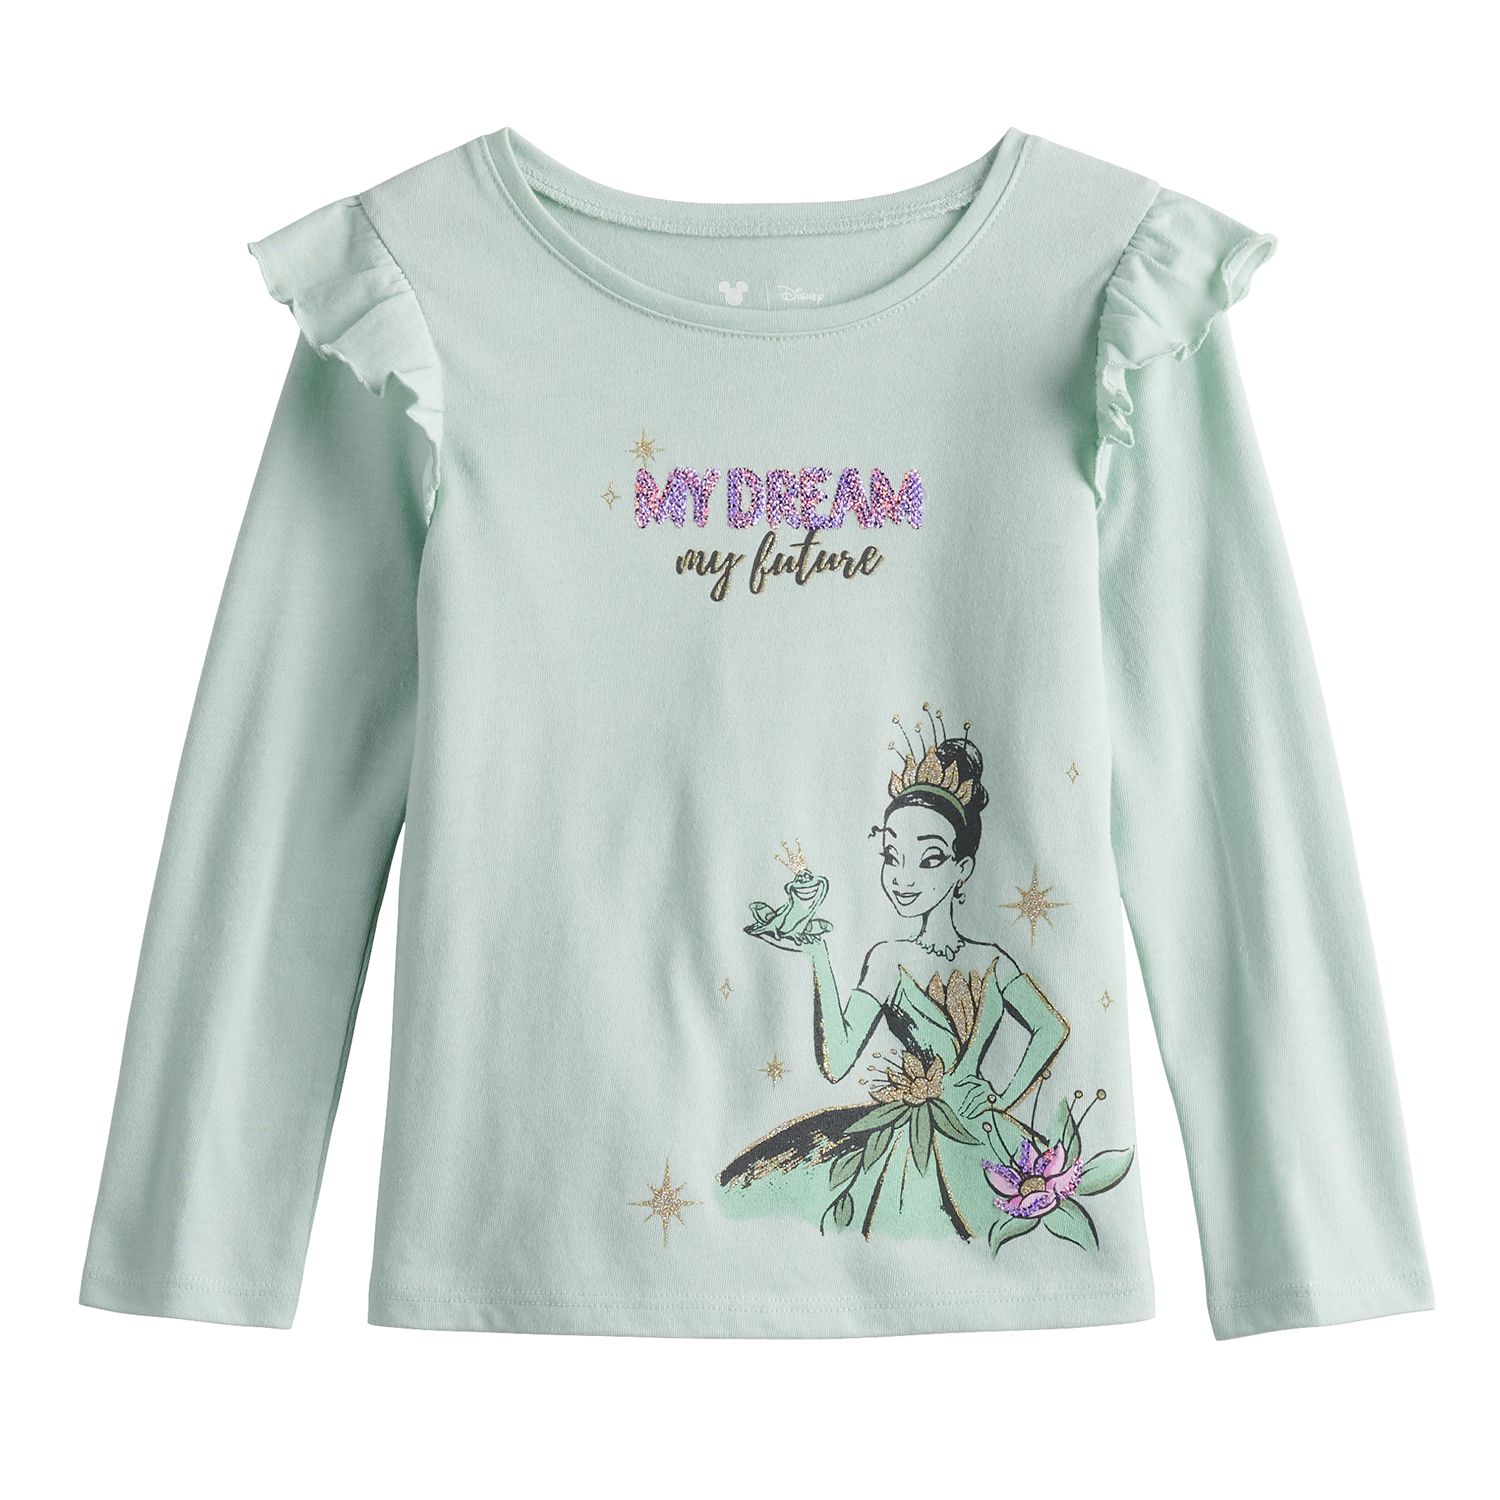 Image for Disney/Jumping Beans Disney's Princess Tiana Toddler Girl Ruffle Tee by Jumping Beans® at Kohl's.